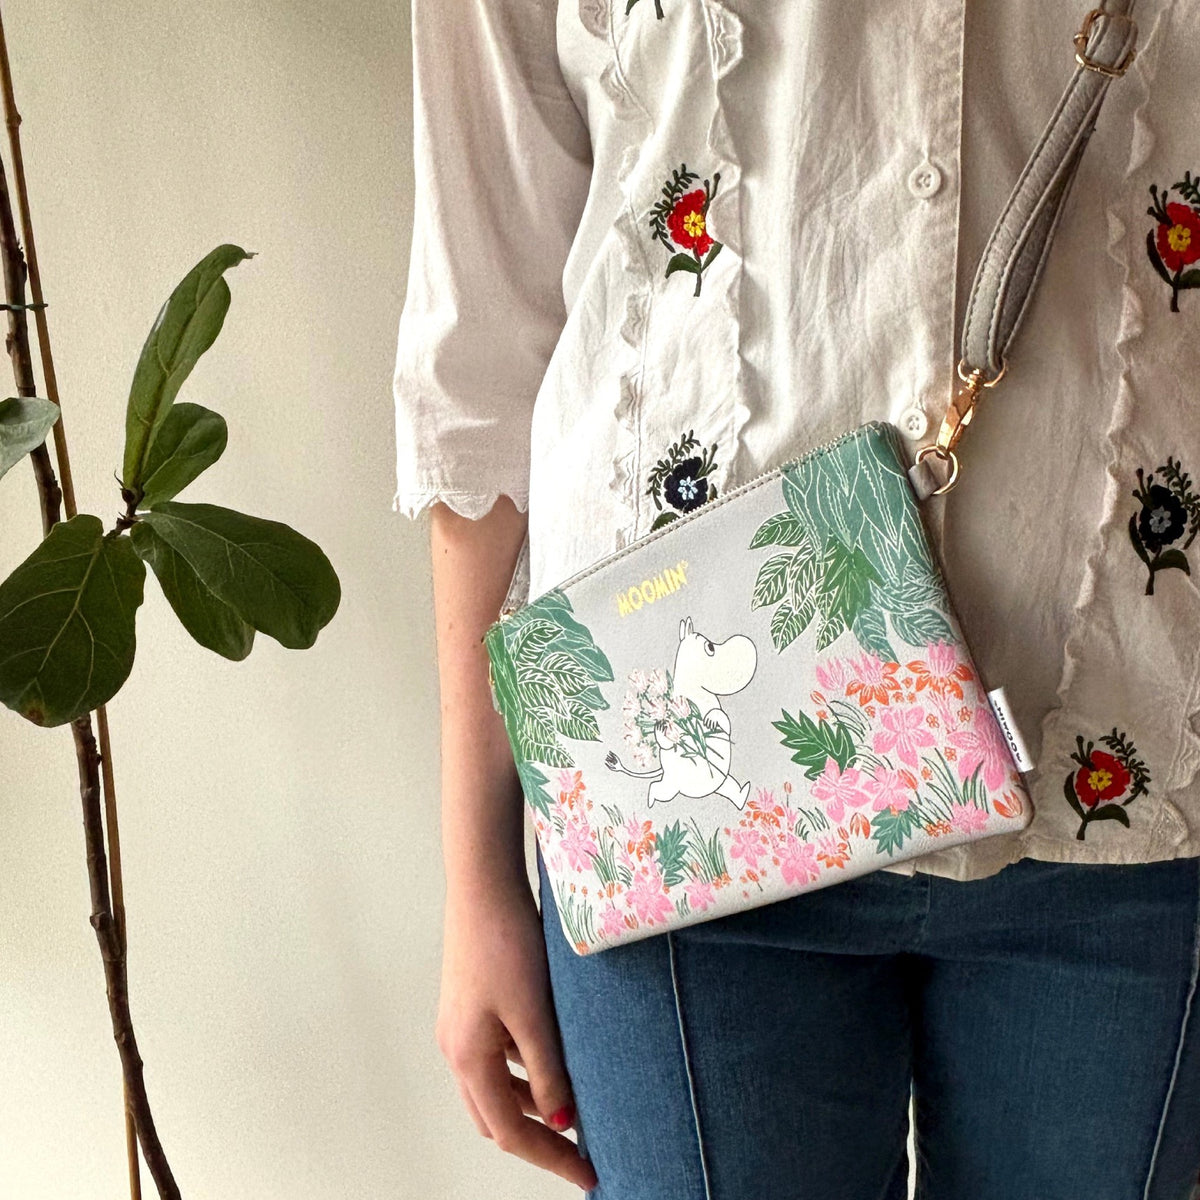 Moomin Crossbody Bag Floral